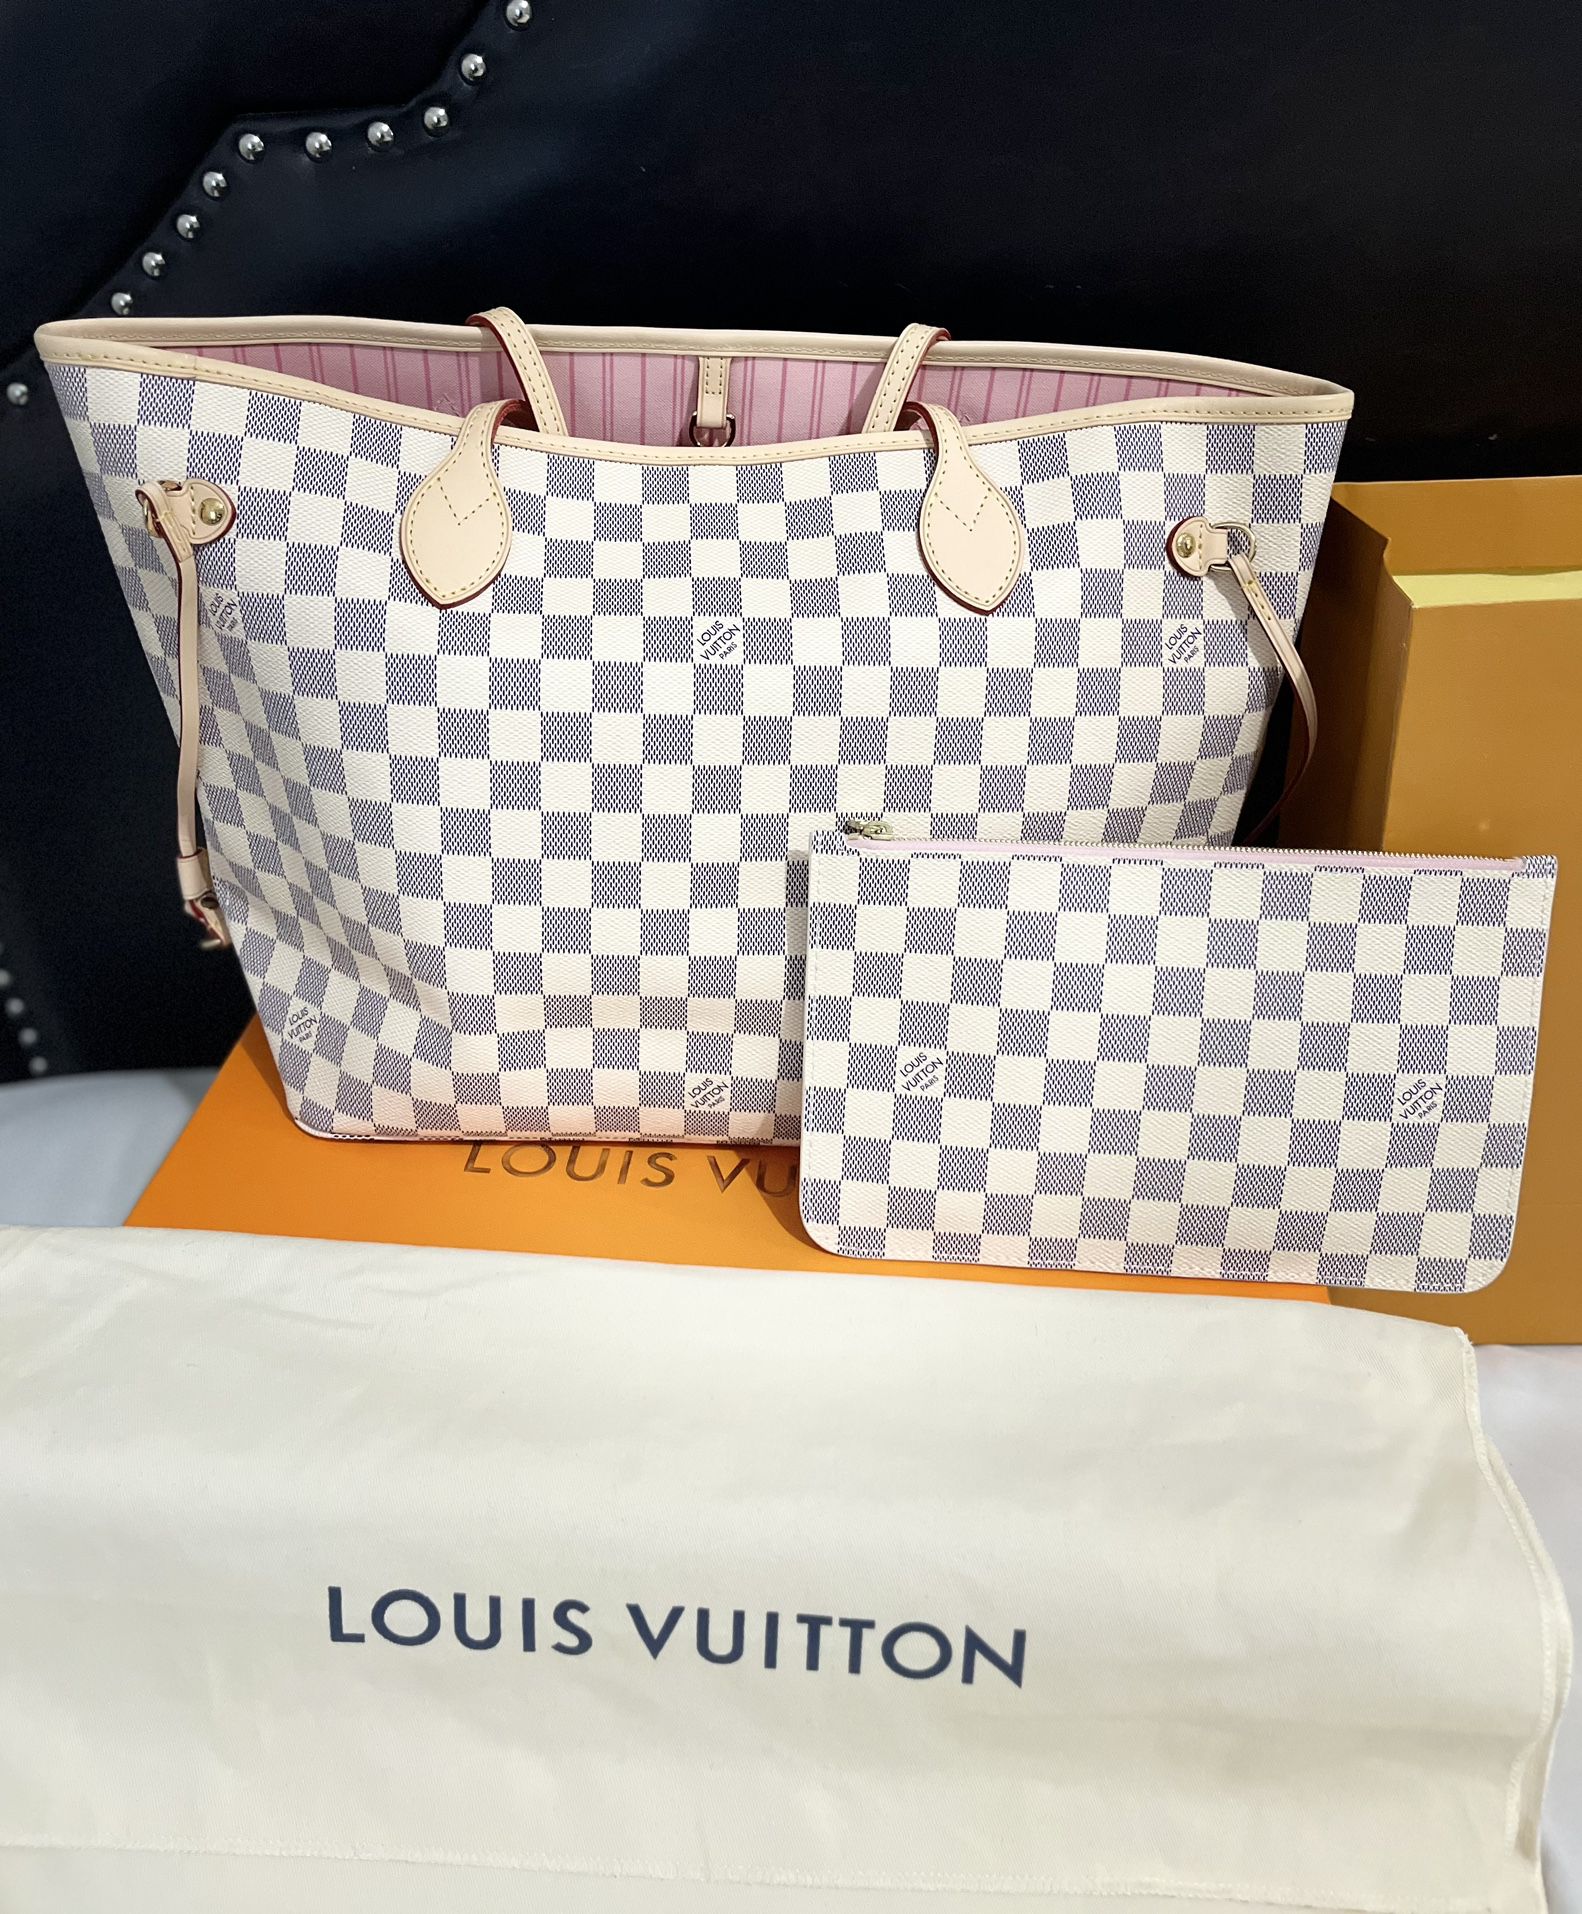 Louis Vuitton Favorite MM Crossbody/Clutch Damier Azur for Sale in Fremont,  CA - OfferUp